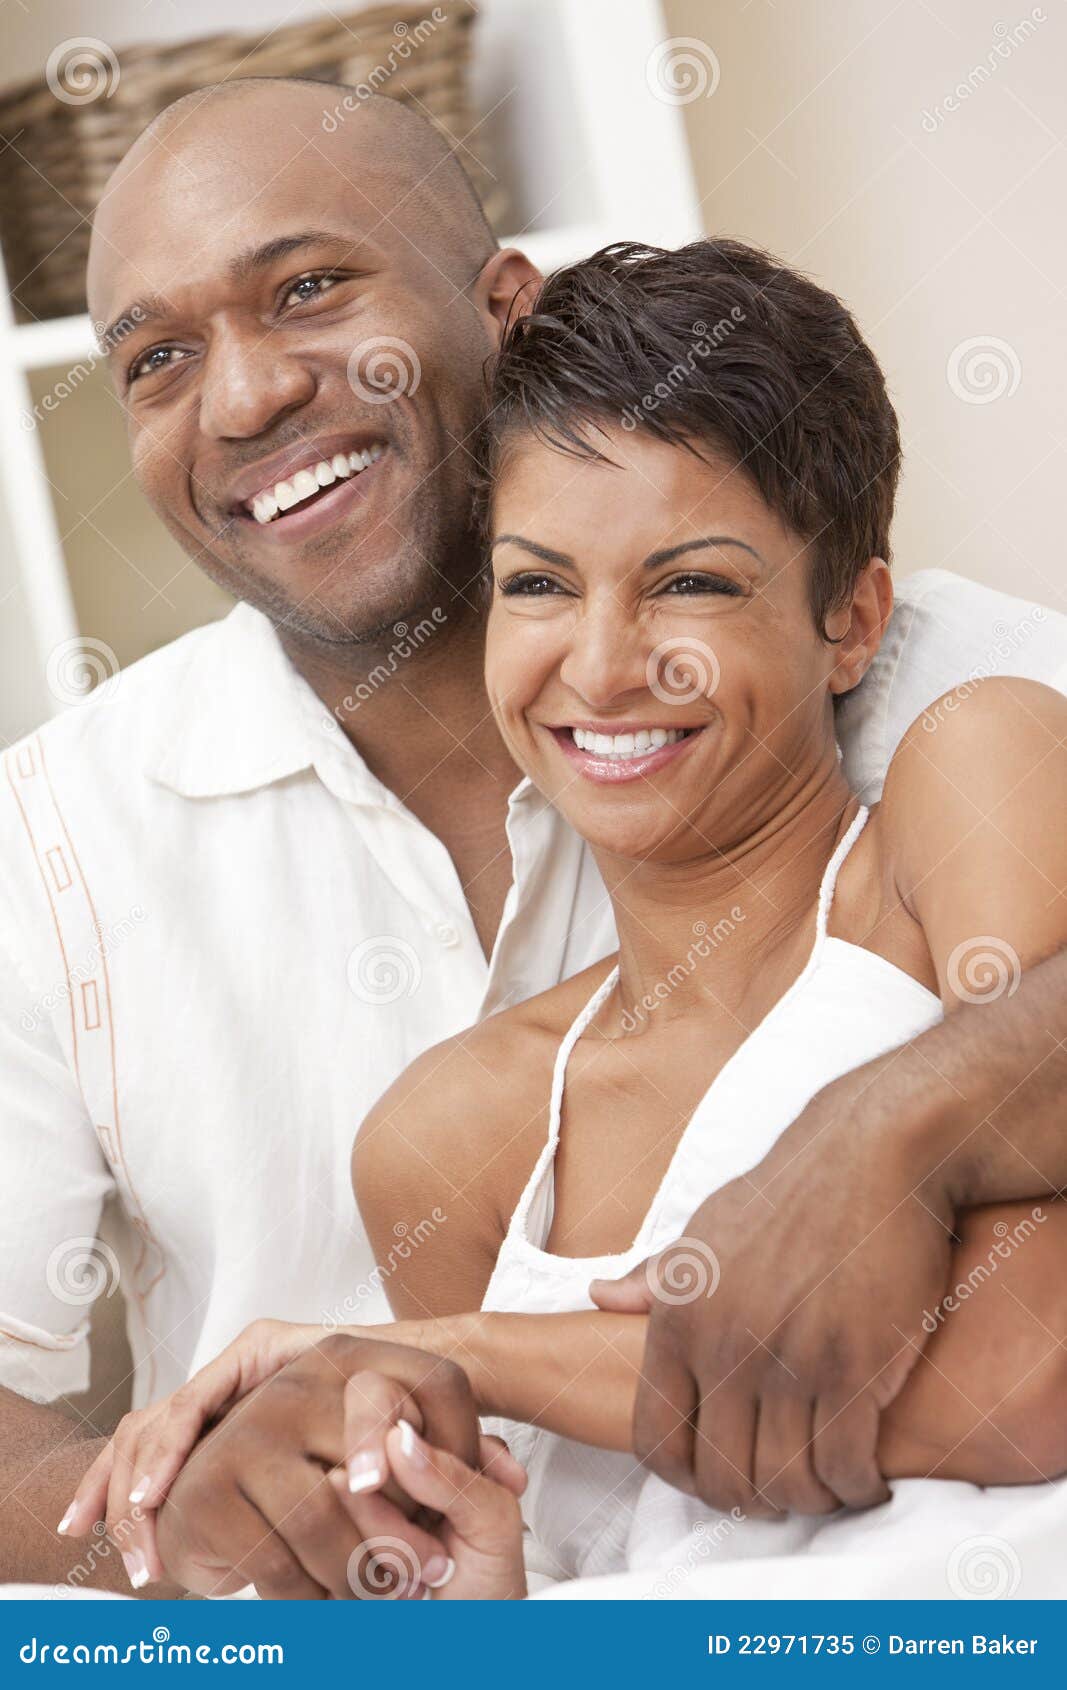 https://thumbs.dreamstime.com/z/happy-african-american-man-woman-couple-22971735.jpg